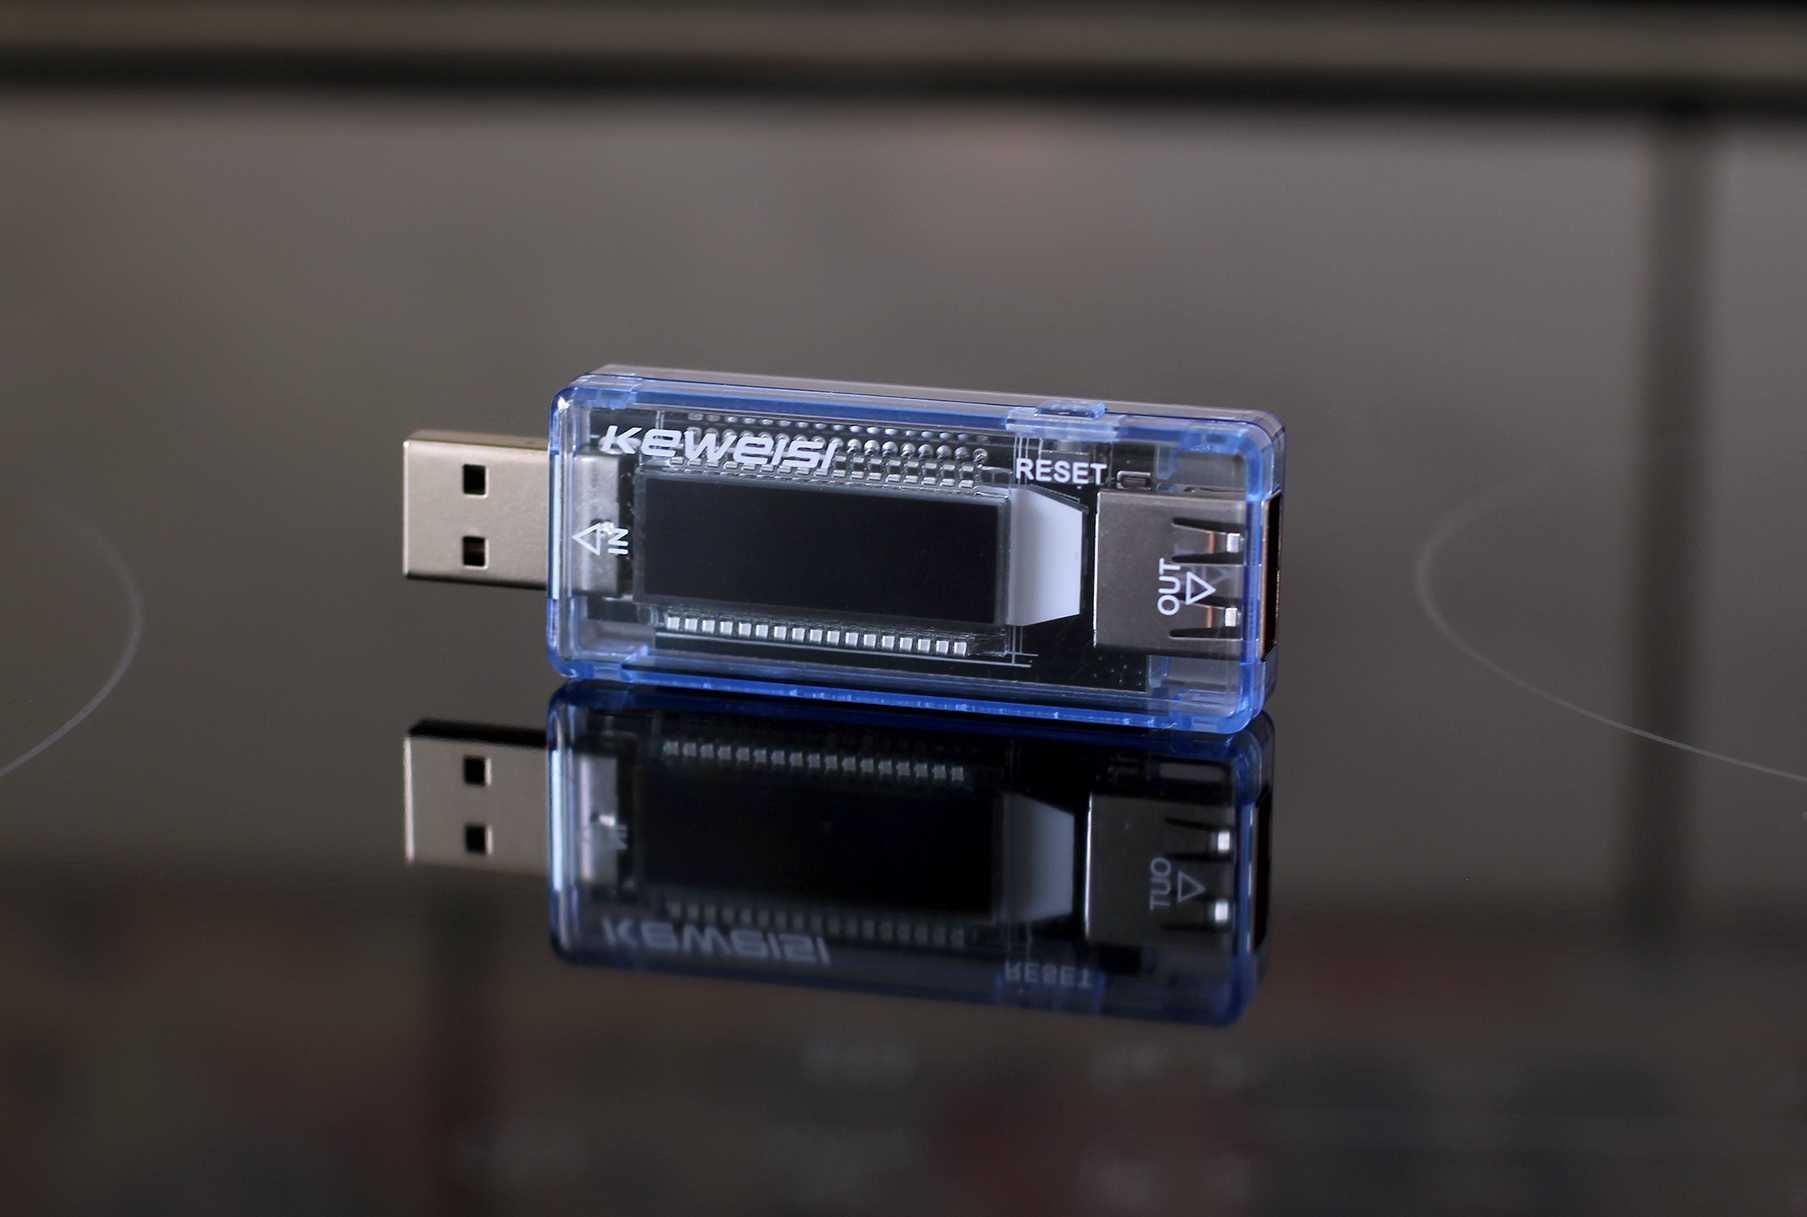 USB тестер ємності детектор вольтметр амперметр измеритель напряжения